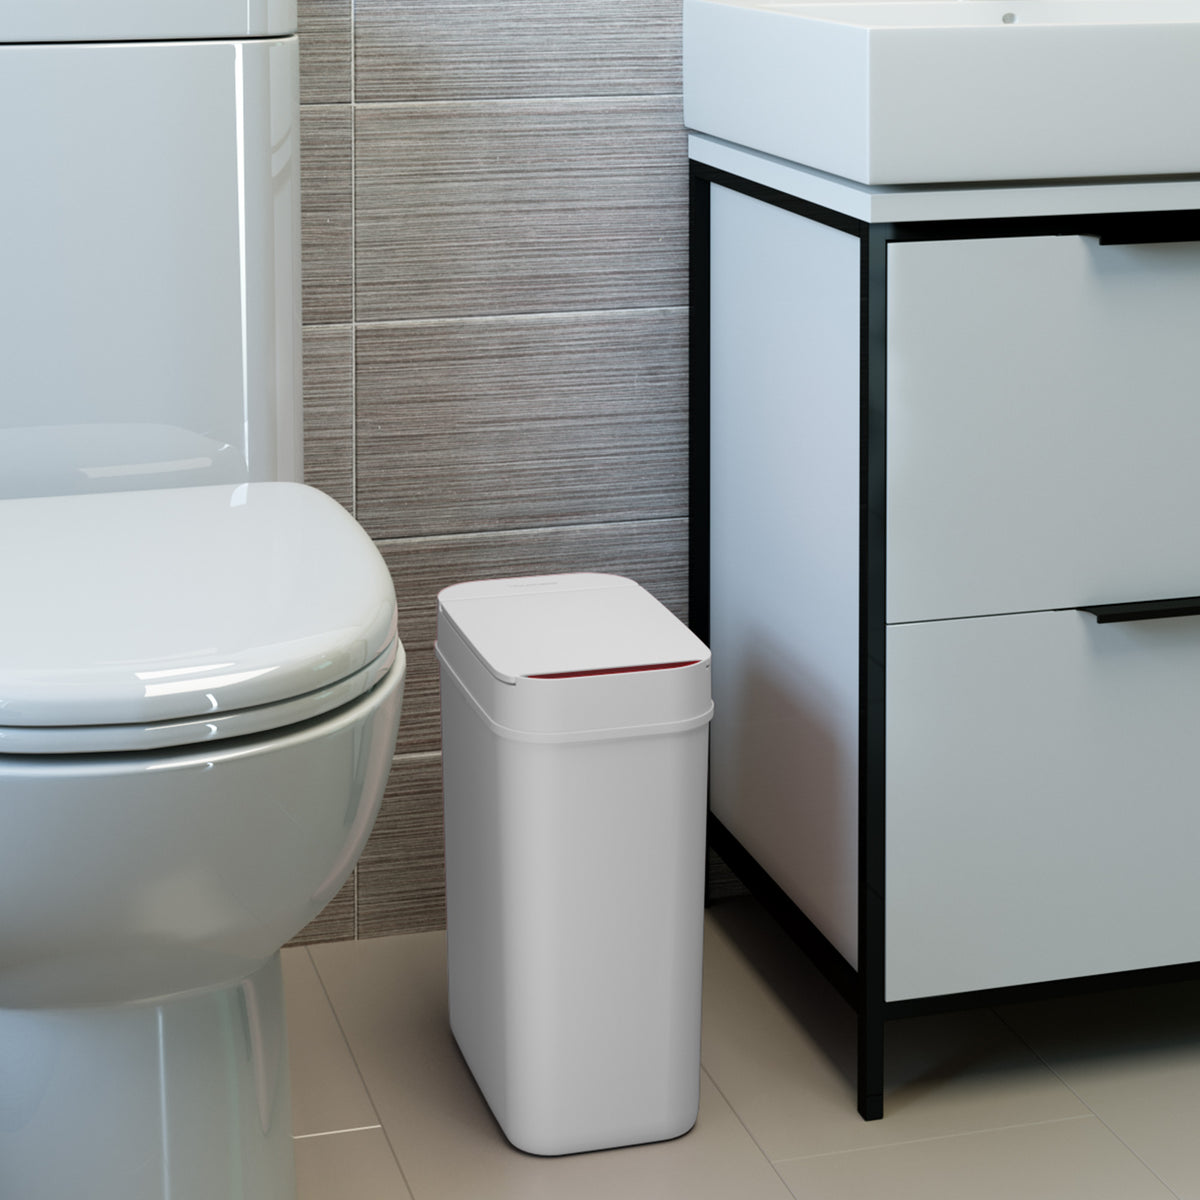 3 Gallon / 10 Liter Plastic Sensor Trash Can (White) in bathroom